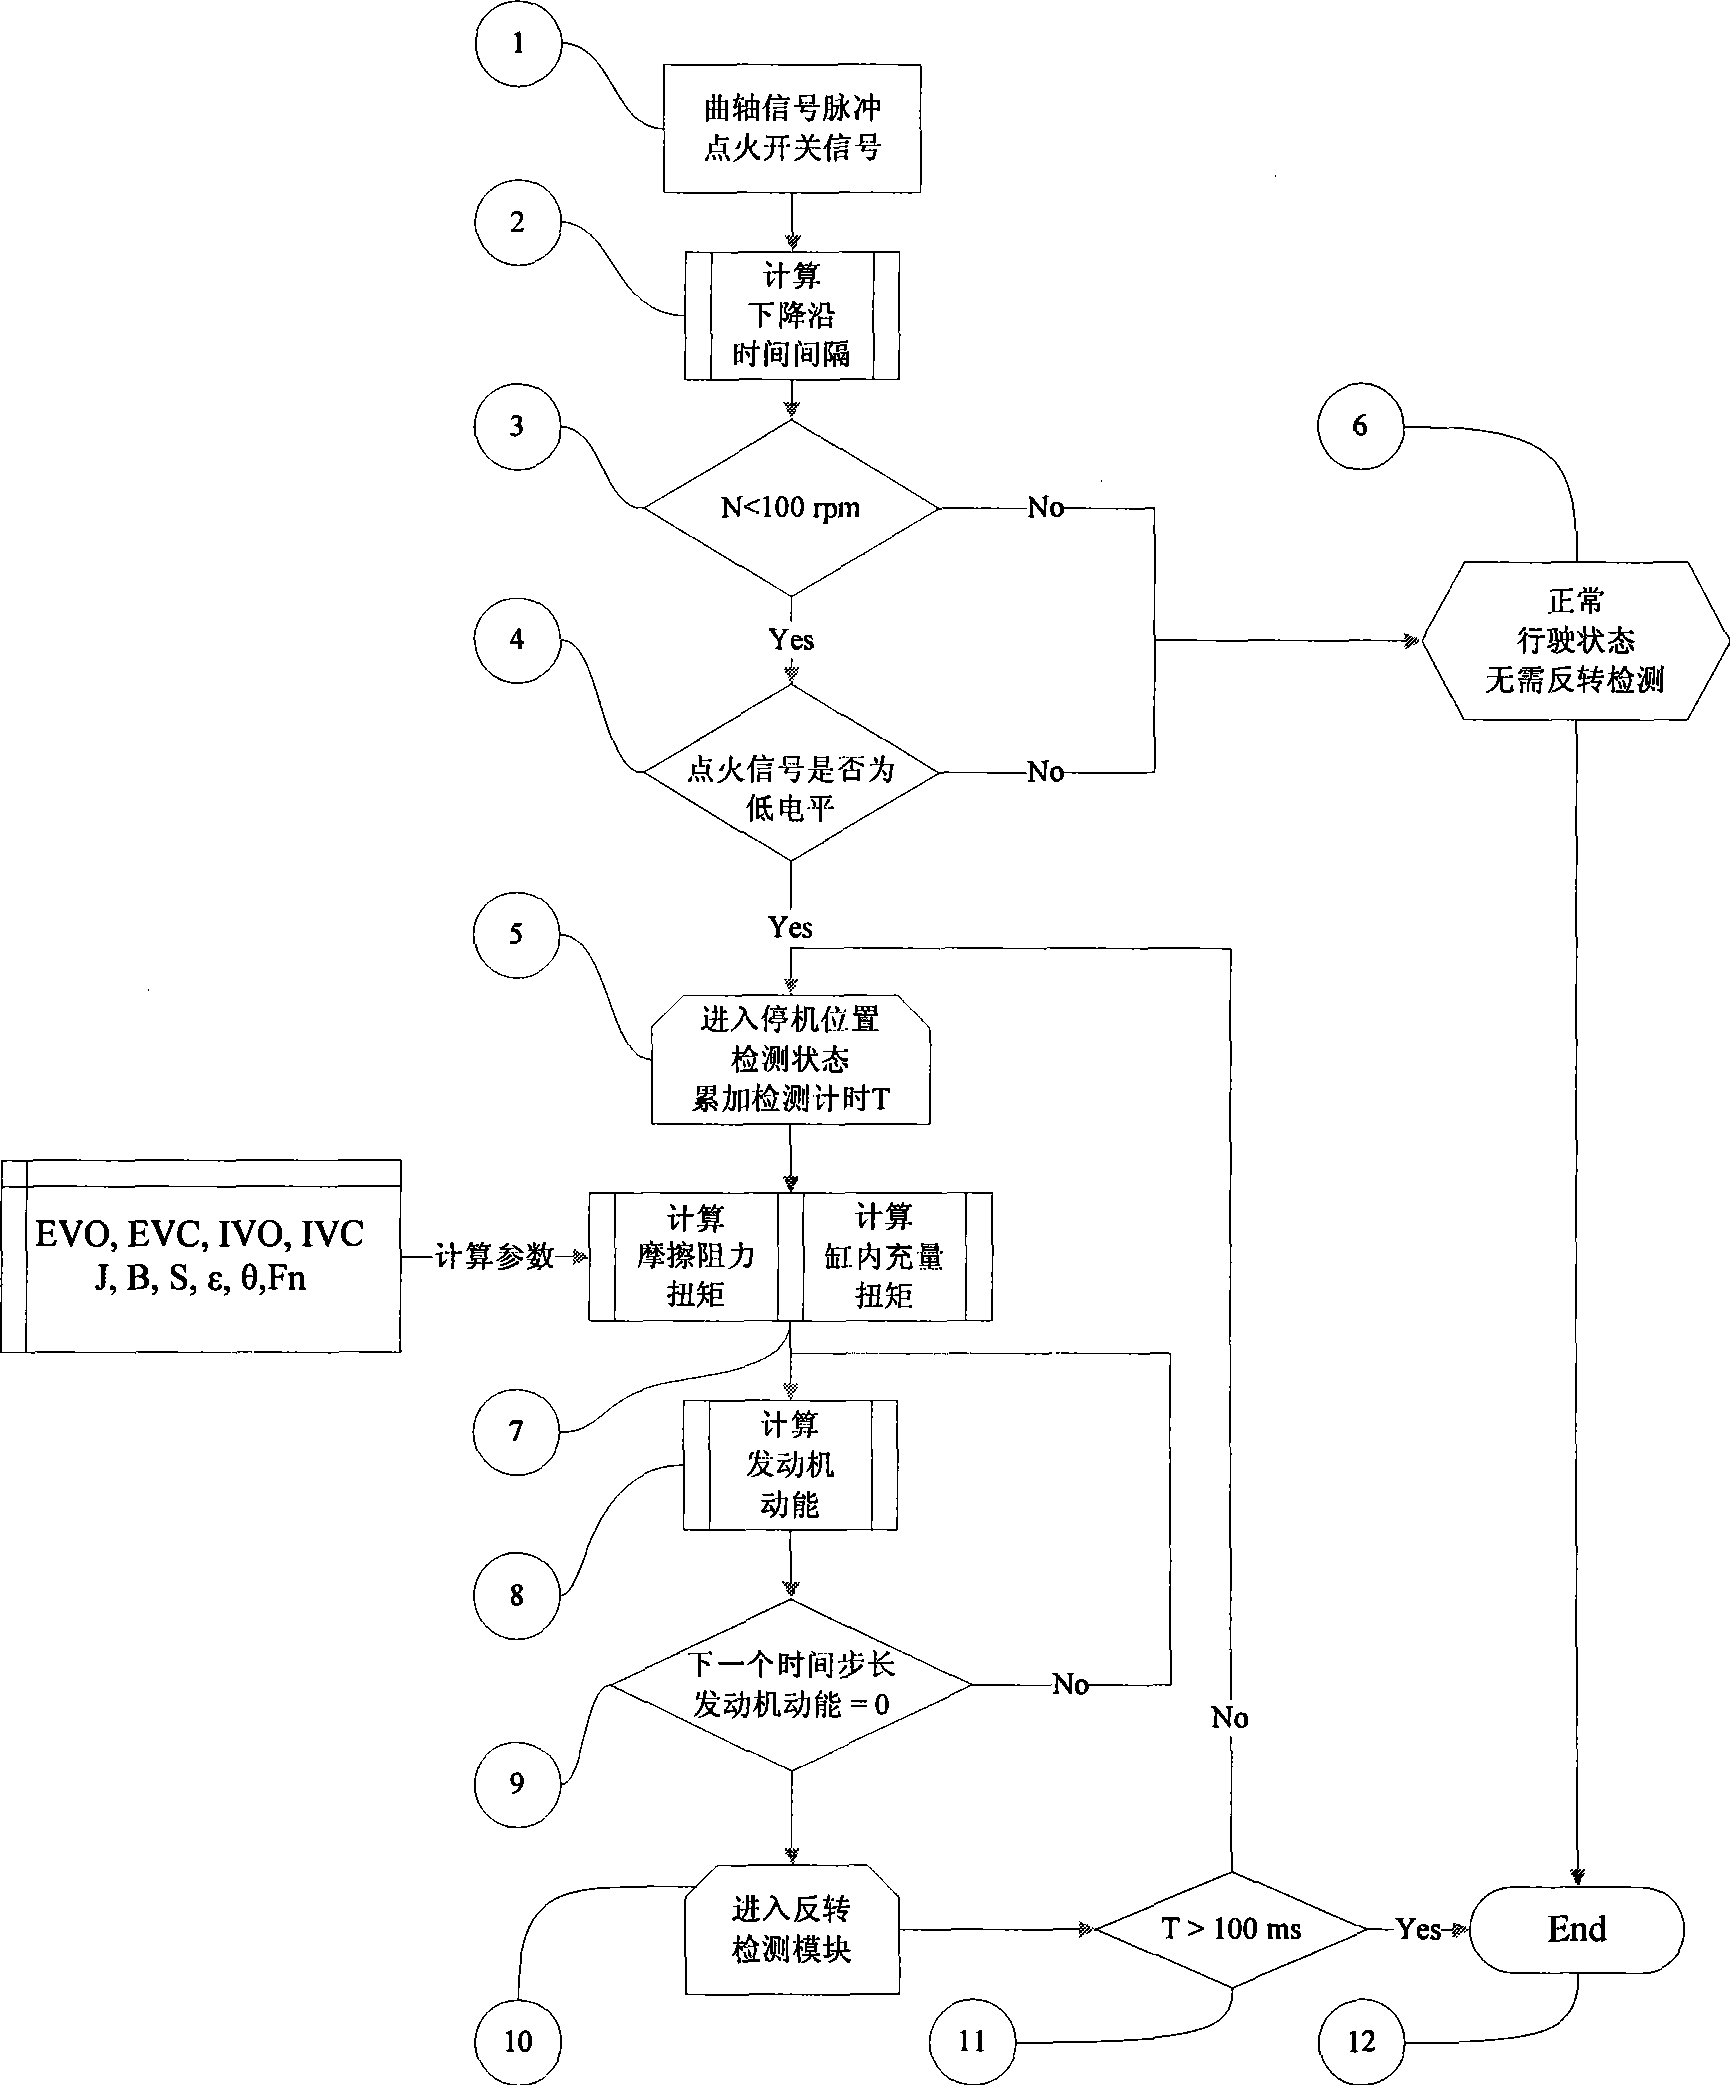 Method for determining engine crankshaft position